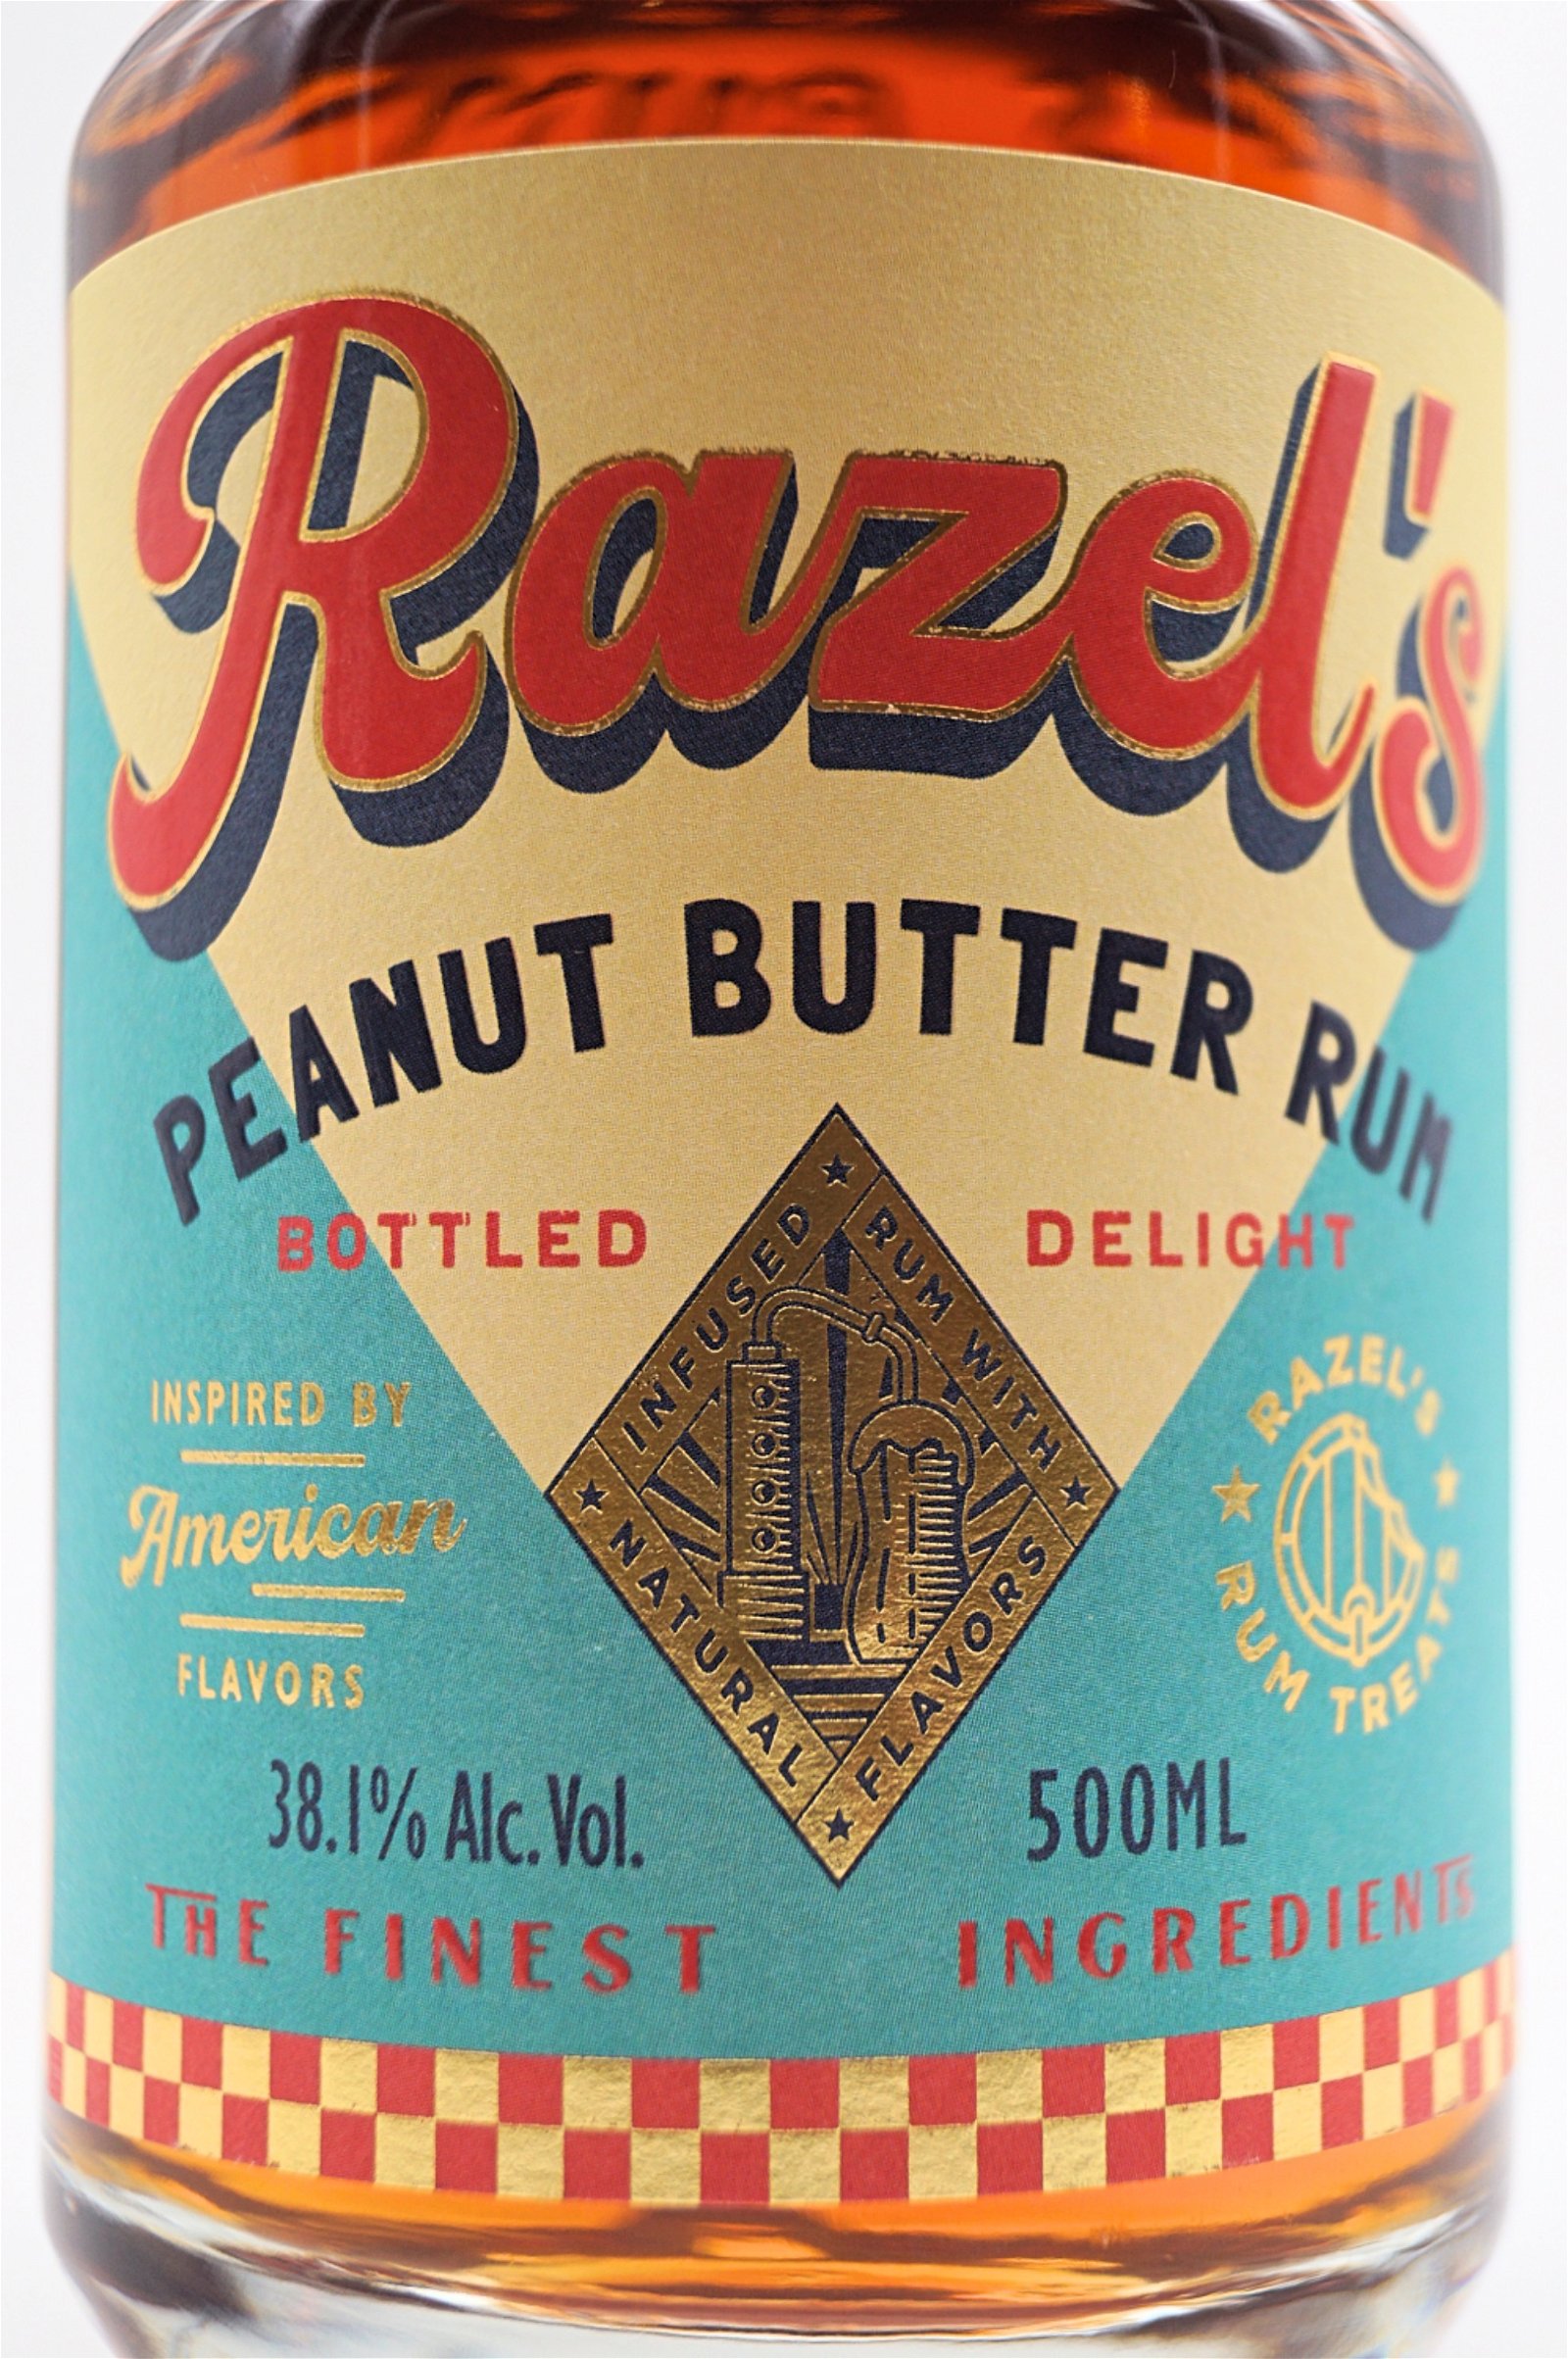 Peanut Butter Rum | LH16273